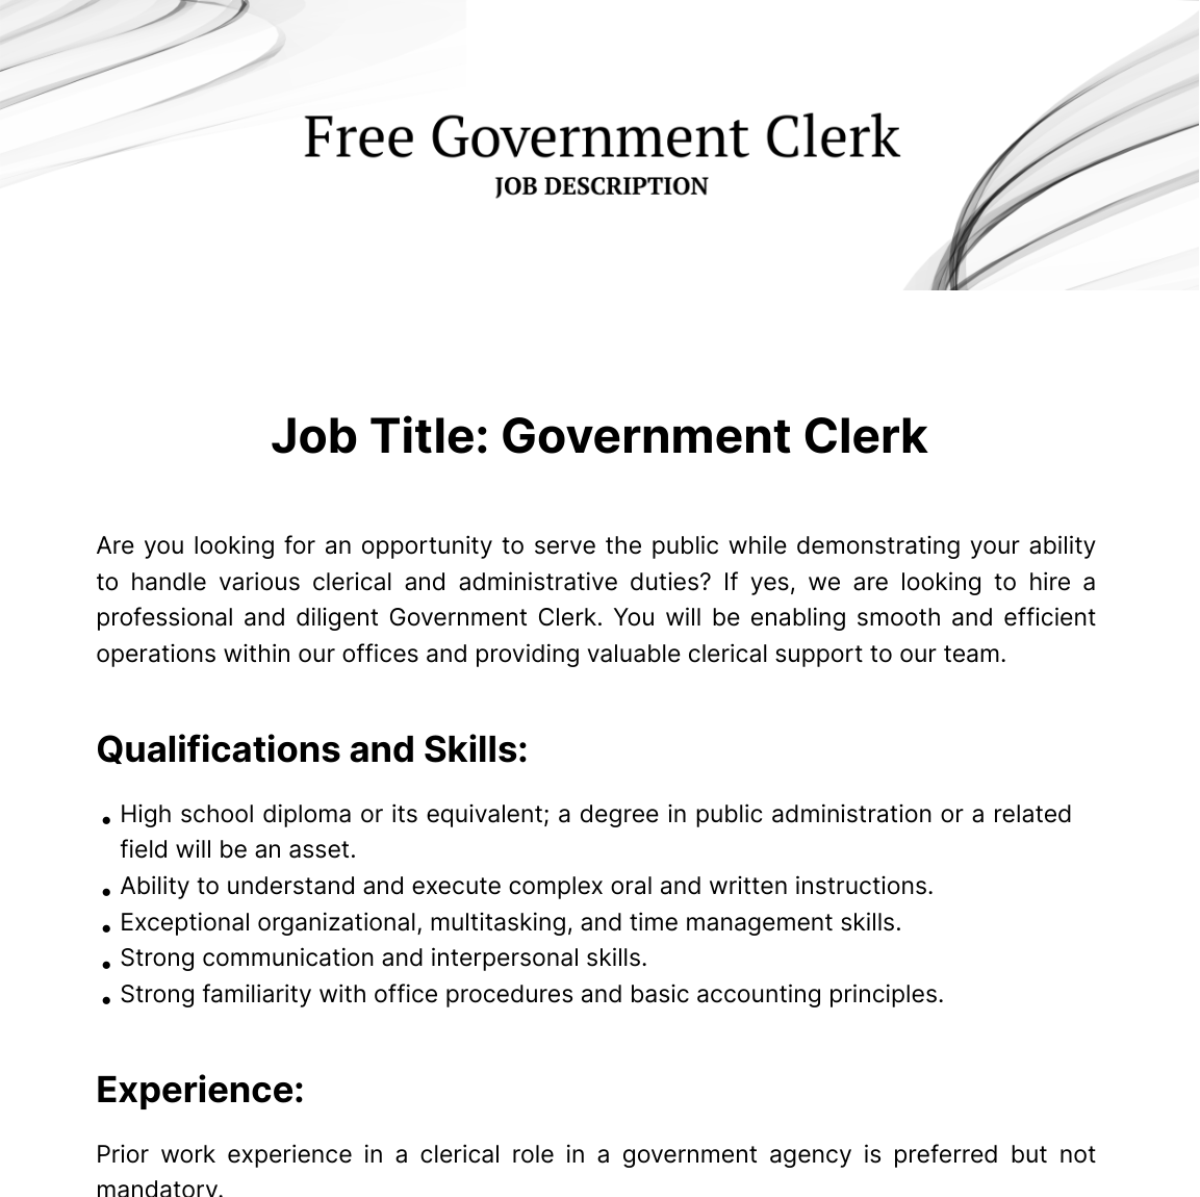 Free Government Clerk Job Description Template